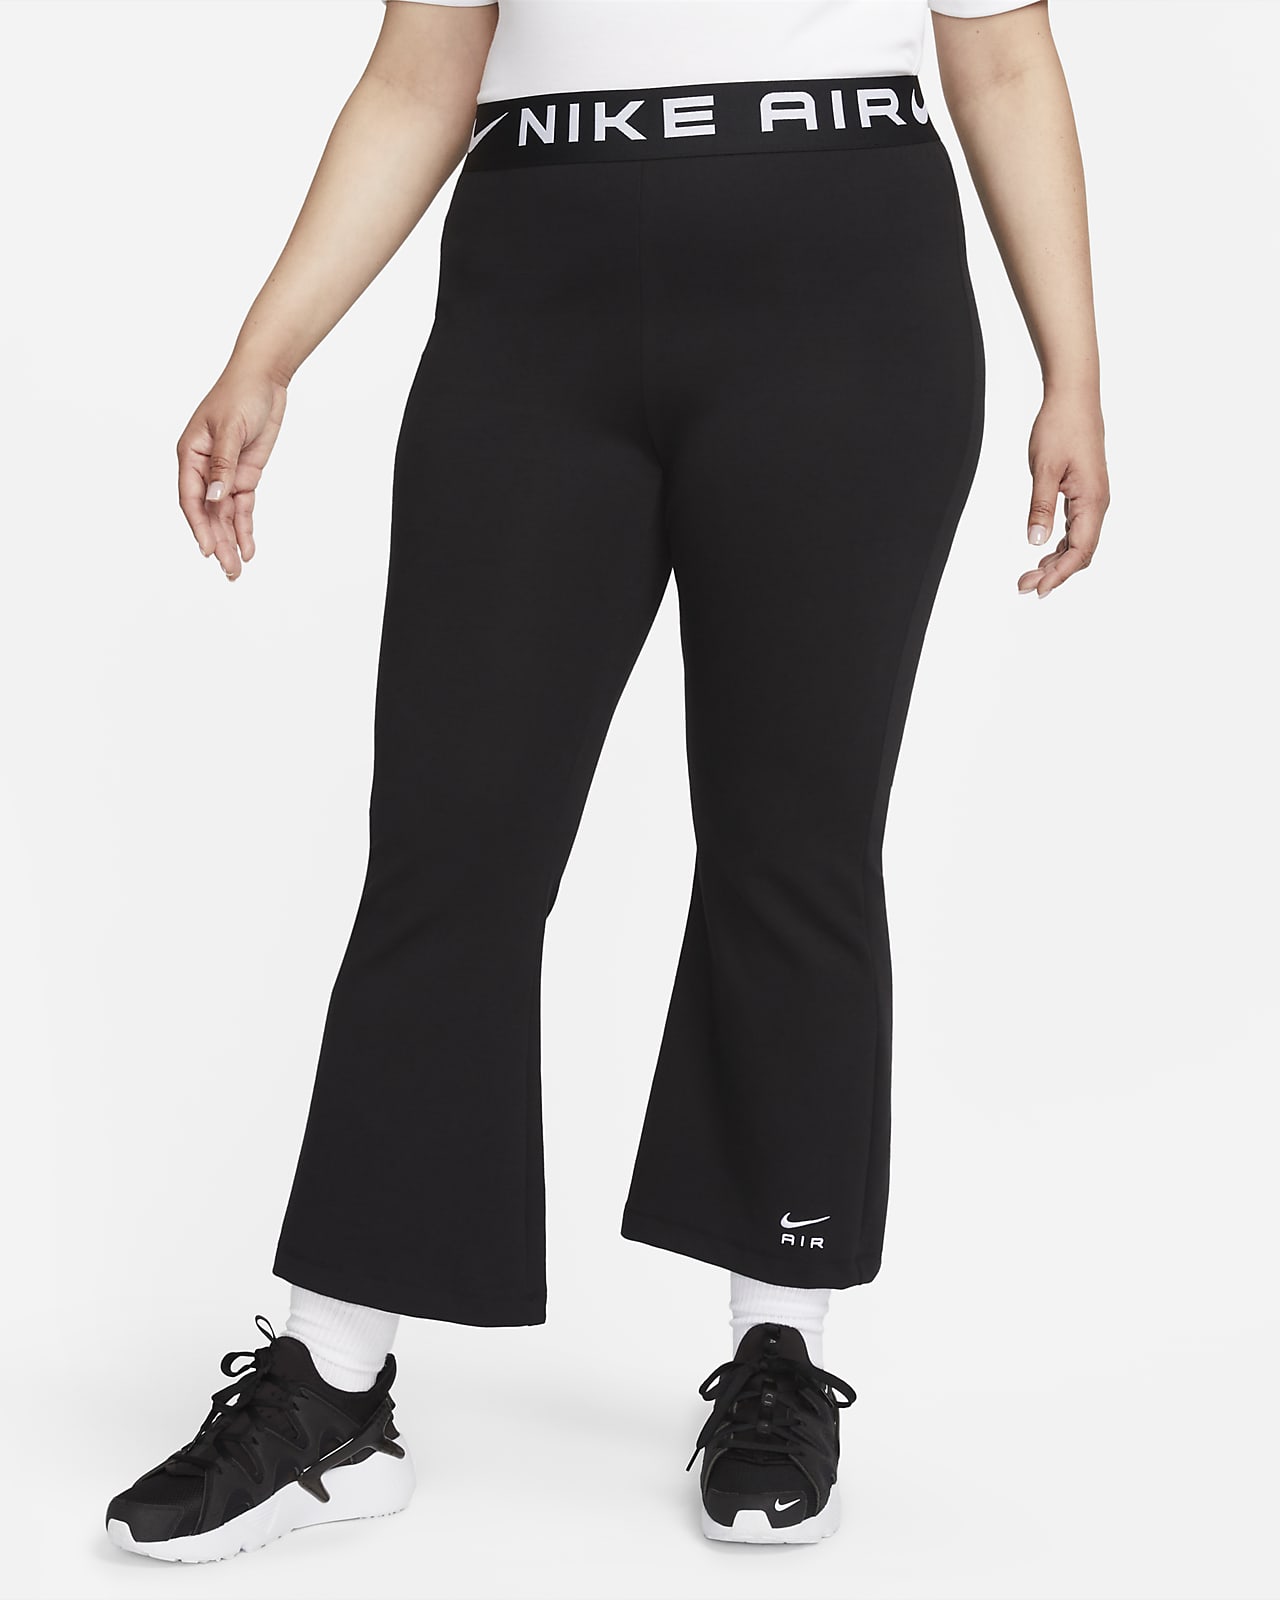 Nike Sportswear Air Women's High-Rise Leggings (Plus Size)